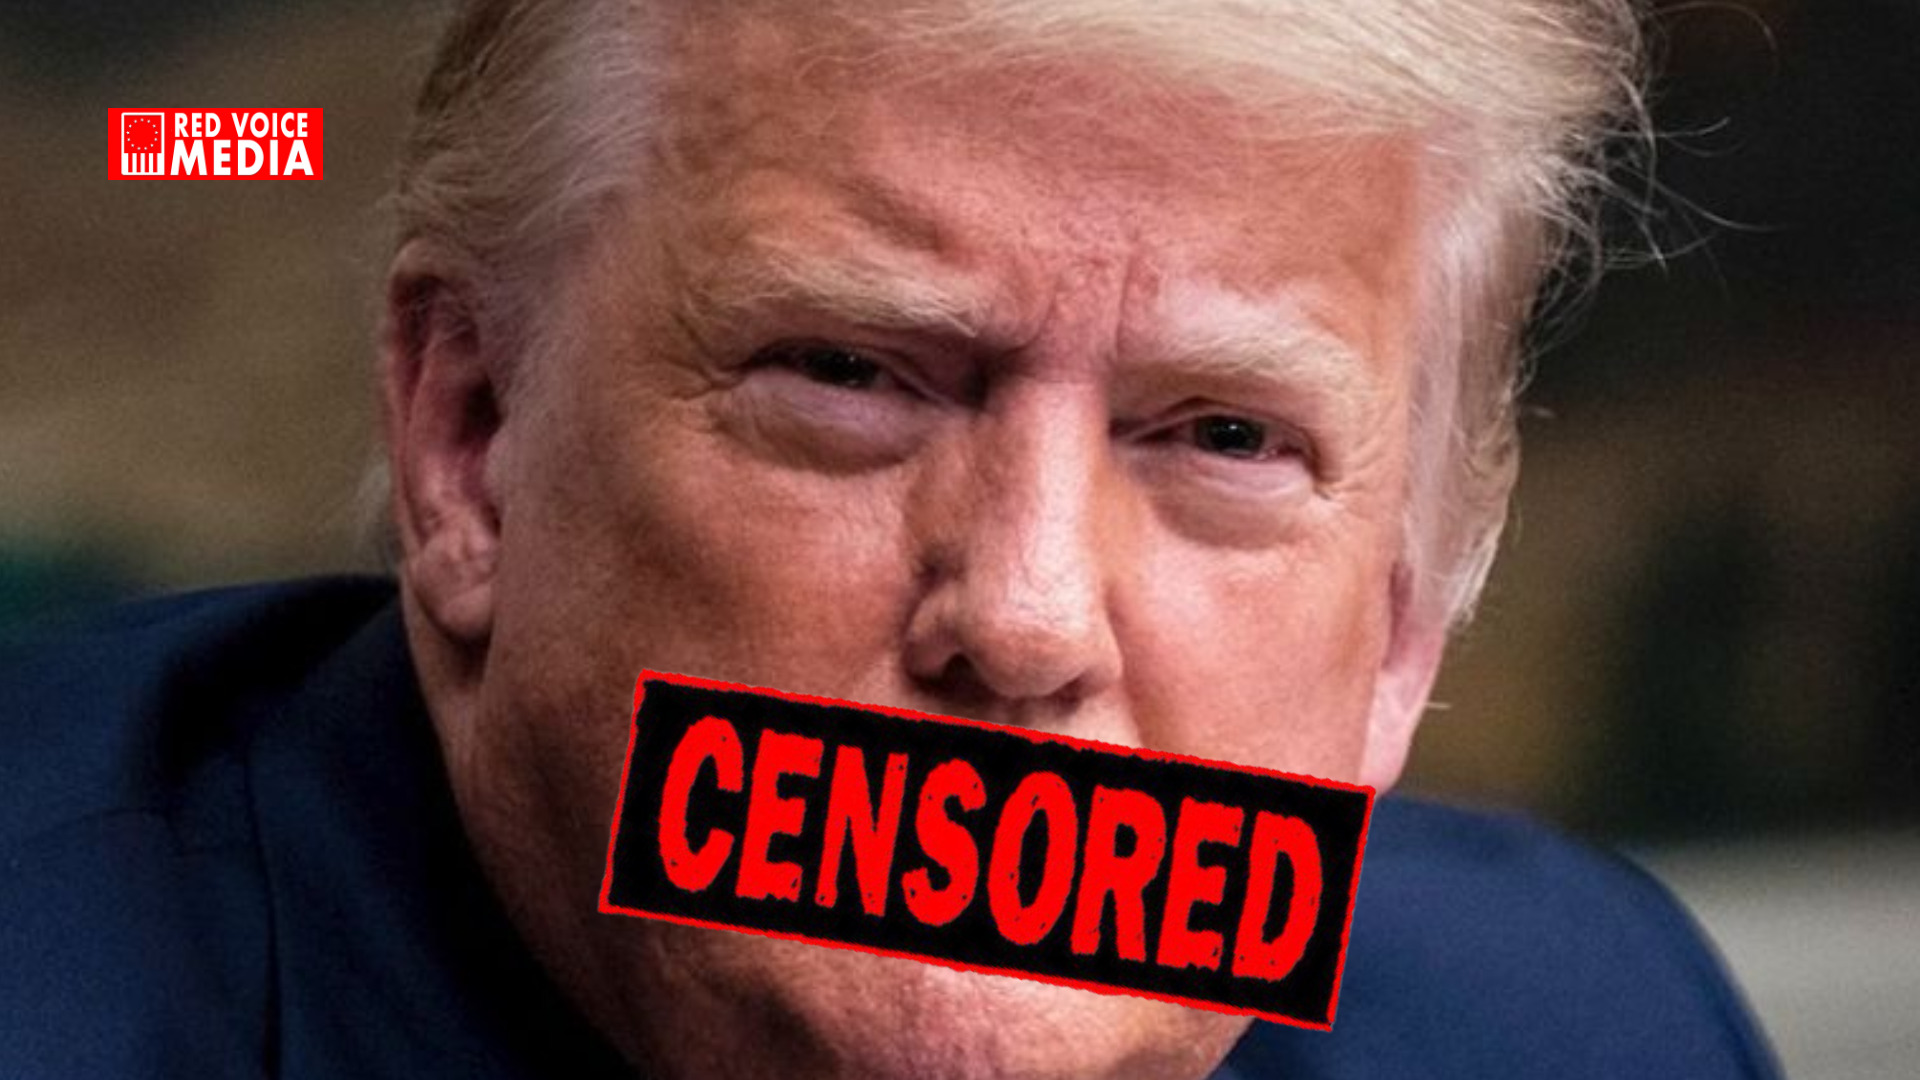 DOJ seeks to censor Trump’s social posts of truth amid legal battle